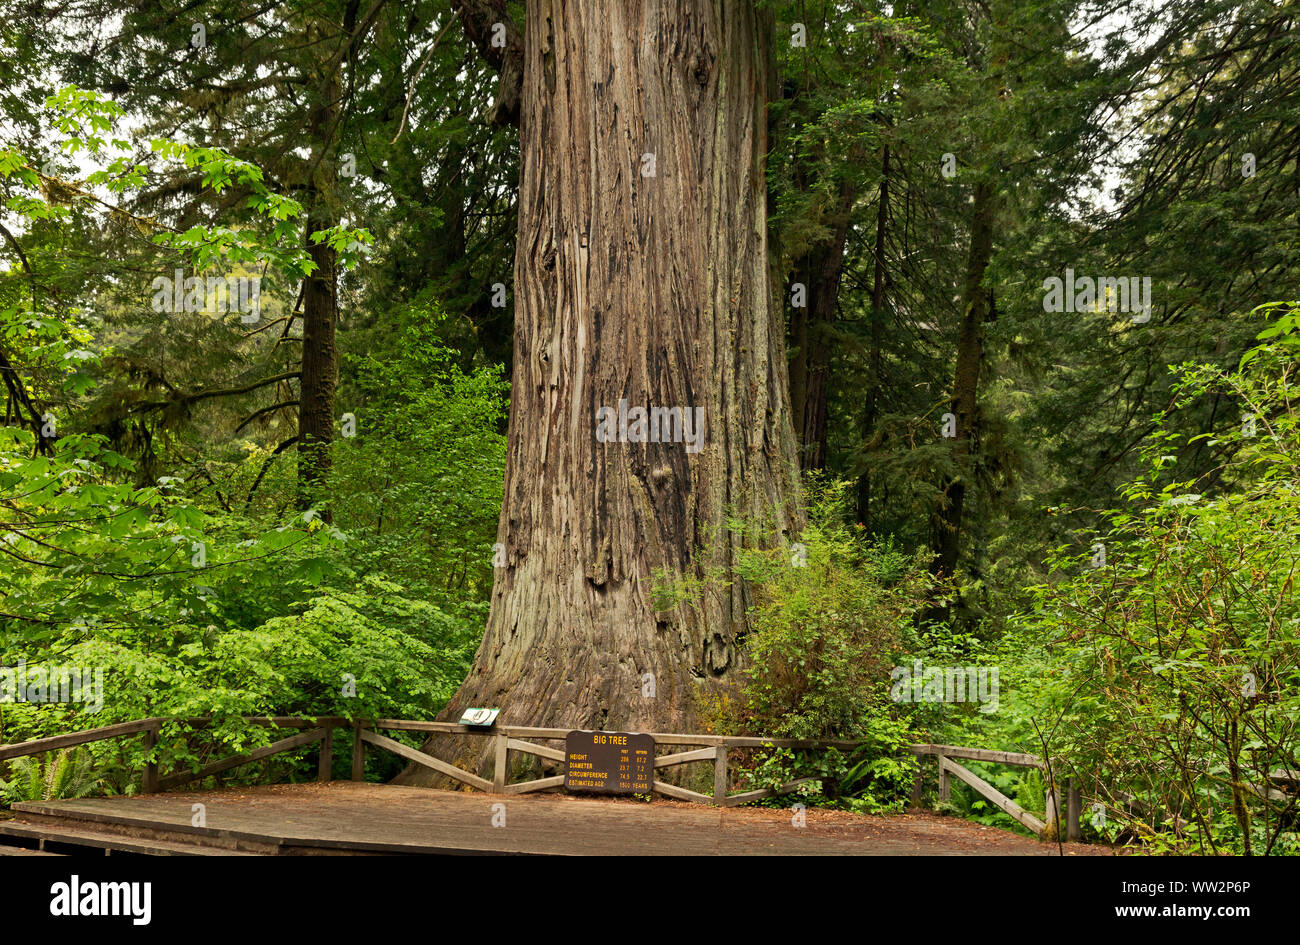 CA03569-00...CALIFORNIA - Big Tree, a popular destination for visitors to Prairie Creek Redwoods State Park; part of Redwoods National and State Parks Stock Photo